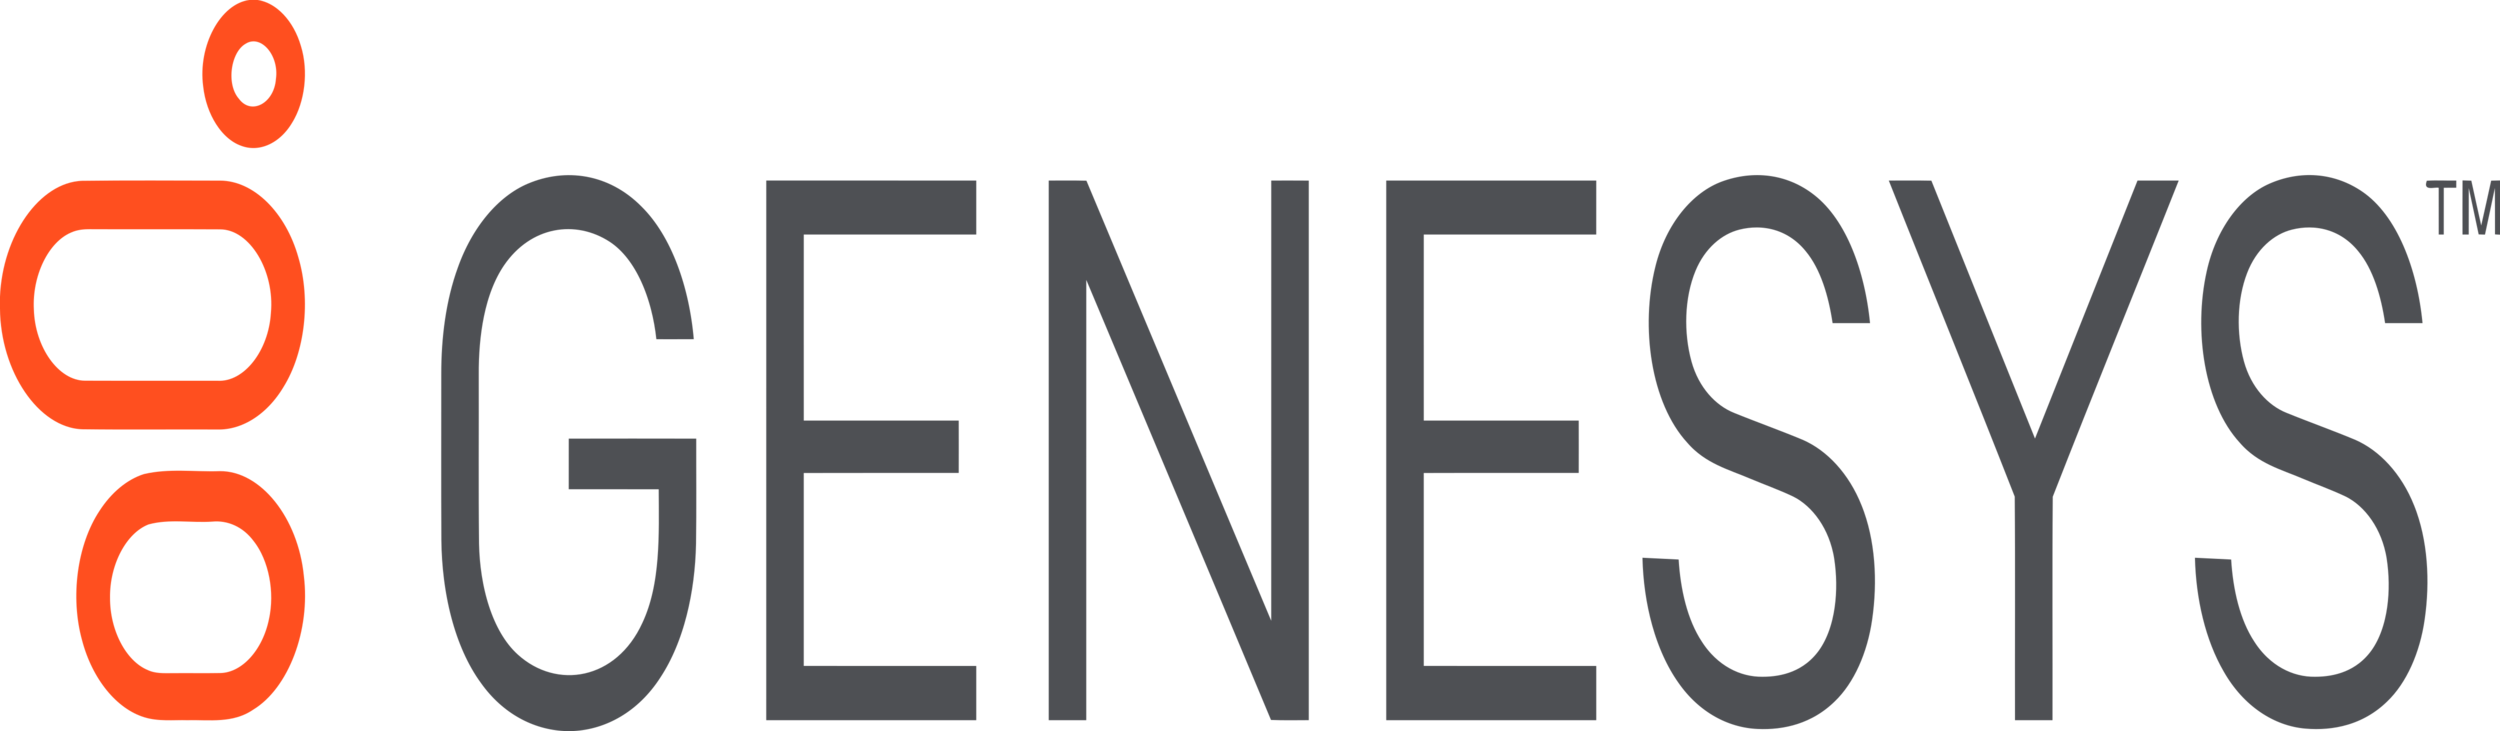 Genesys_Logo.png